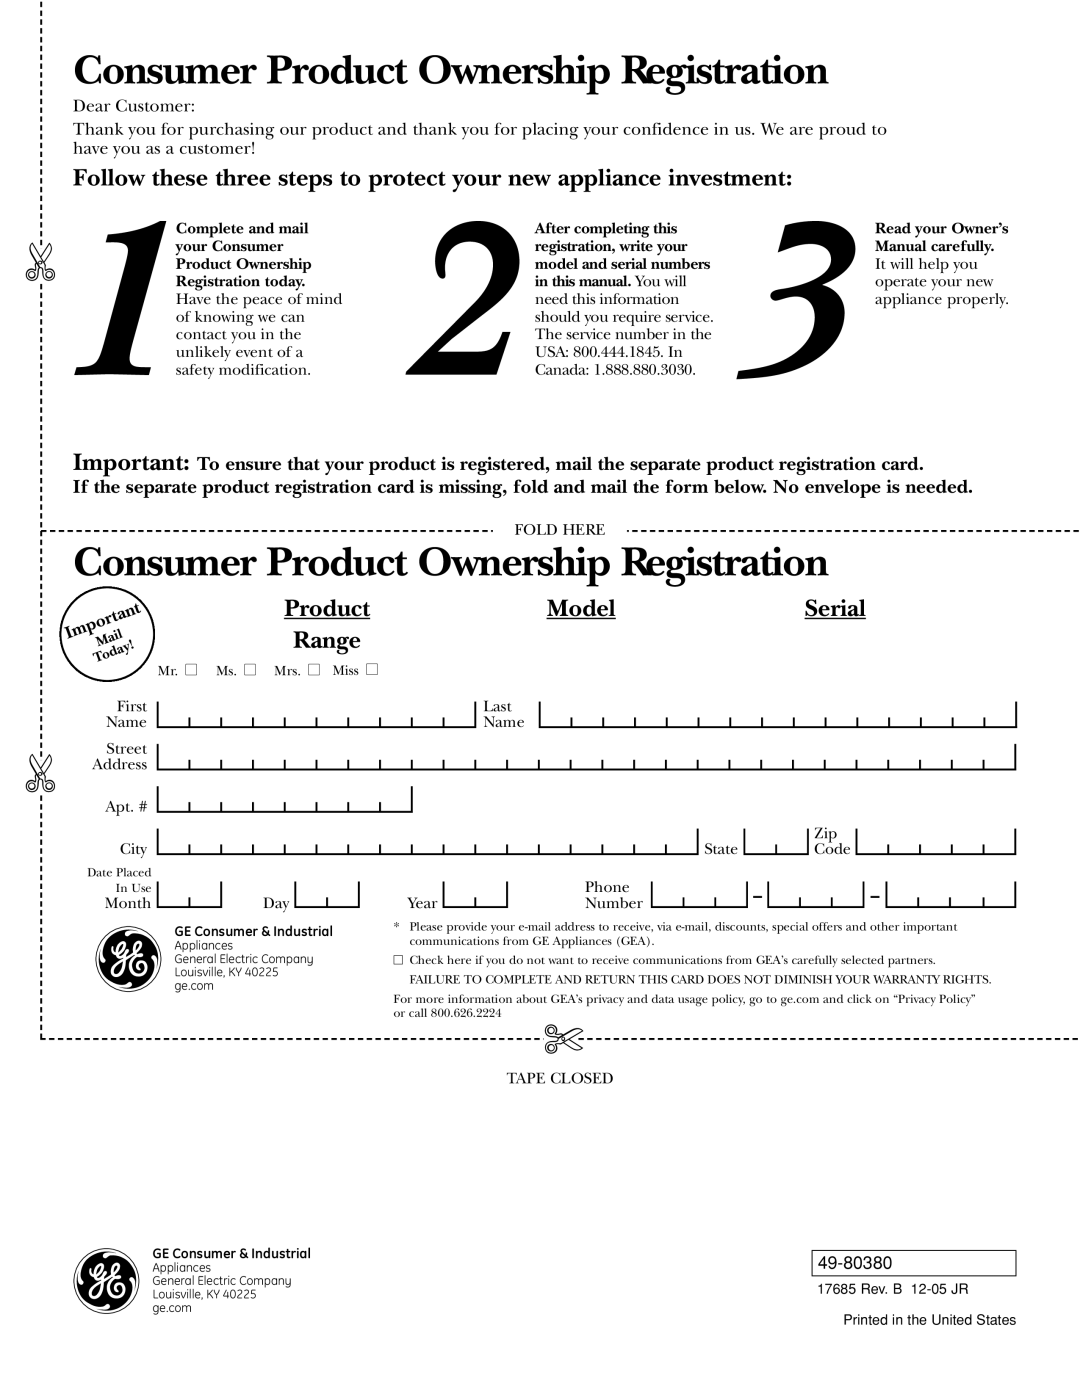 GE Monogram ZDP48L6D, ZDP48L6R, ZDP48N4G, ZDP36L4D, ZDP36L6 Consumer Product Ownership Registration, Model, Range, Serial 